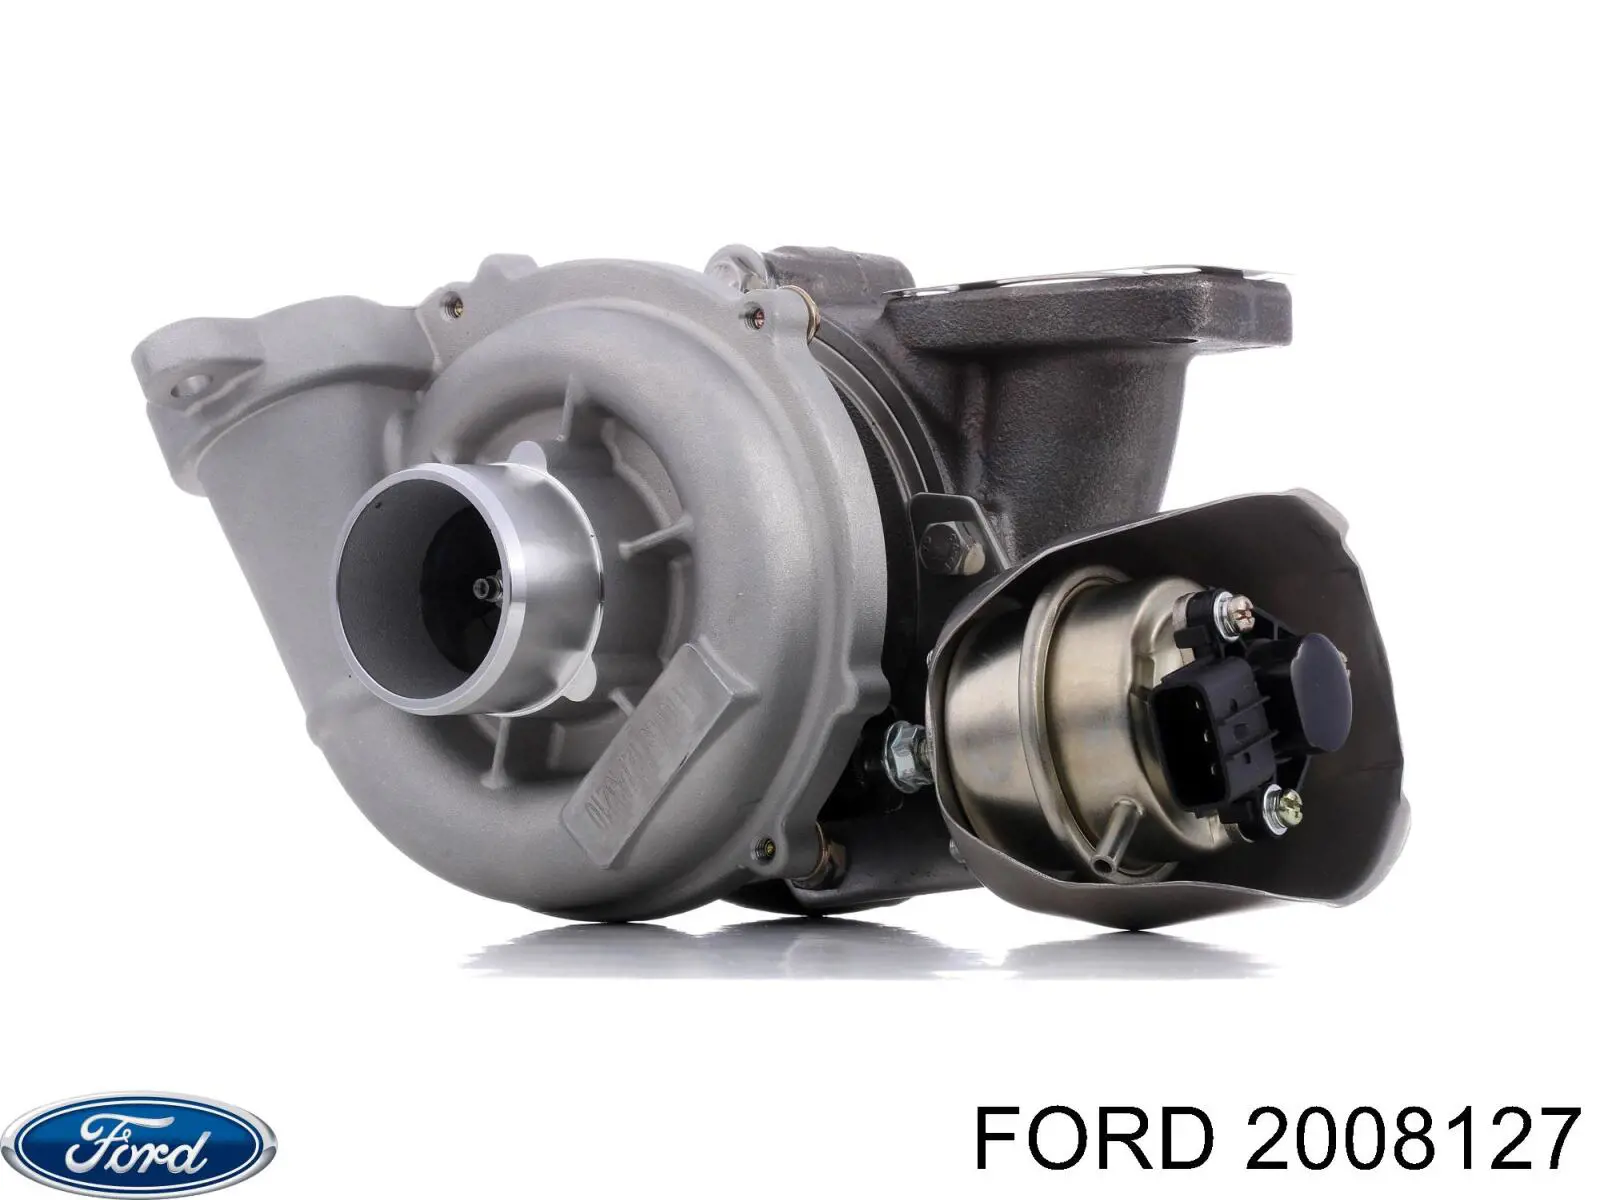 2008127 Ford турбіна